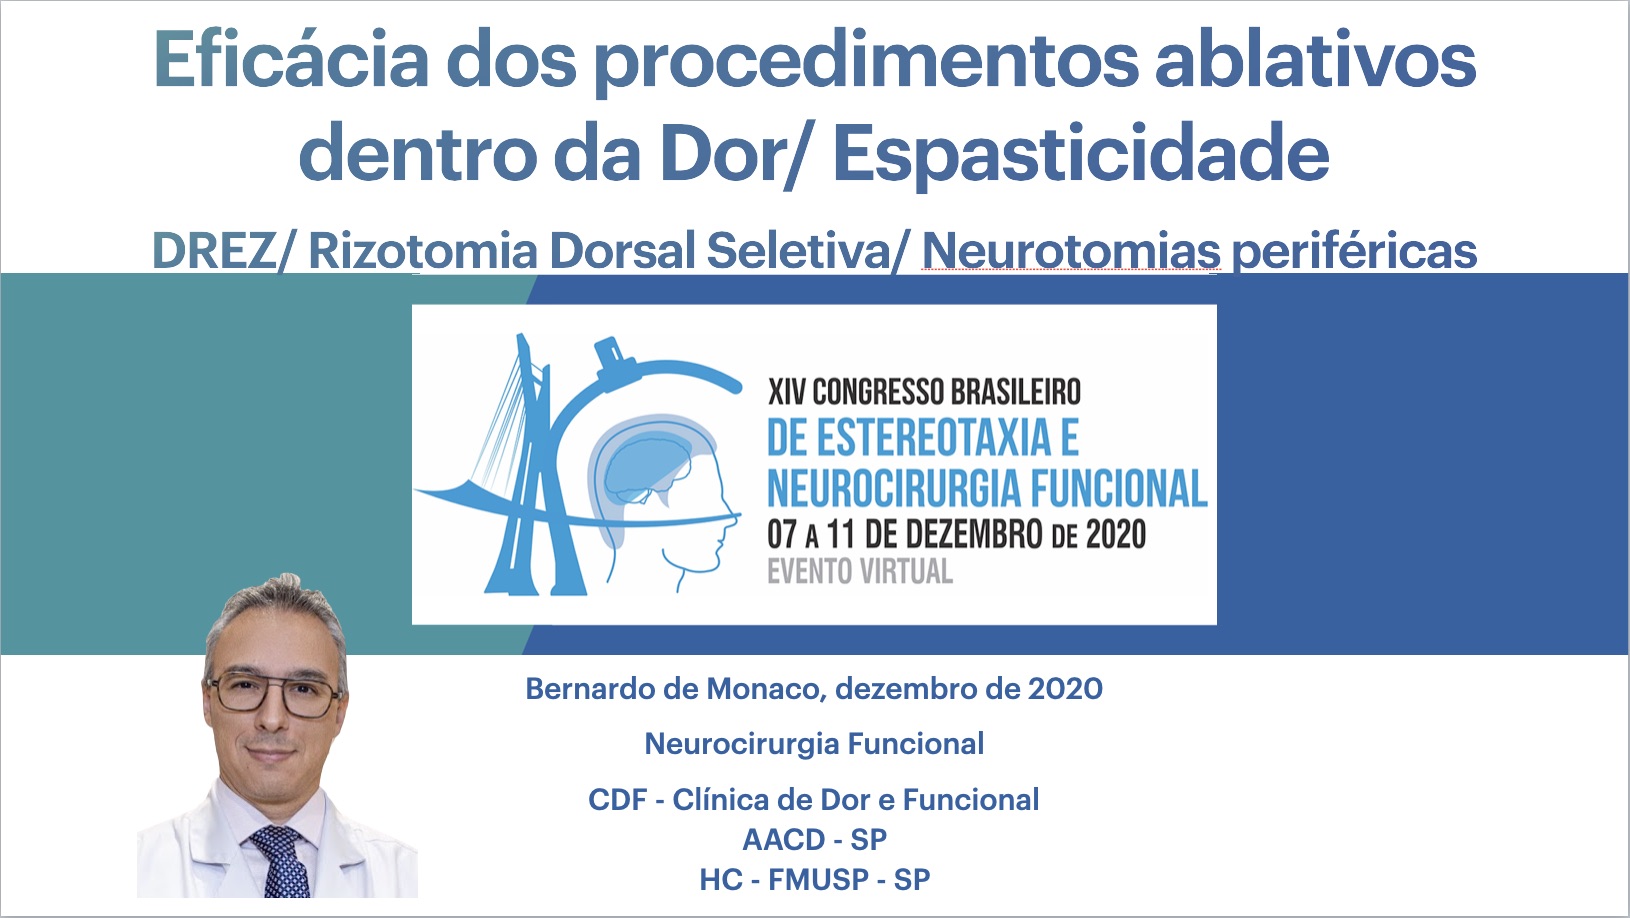 Aula no Congresso da Sociedade Brasileira de Estereotaxia e Neurocirurgia Funcional - SBENF - em 2020